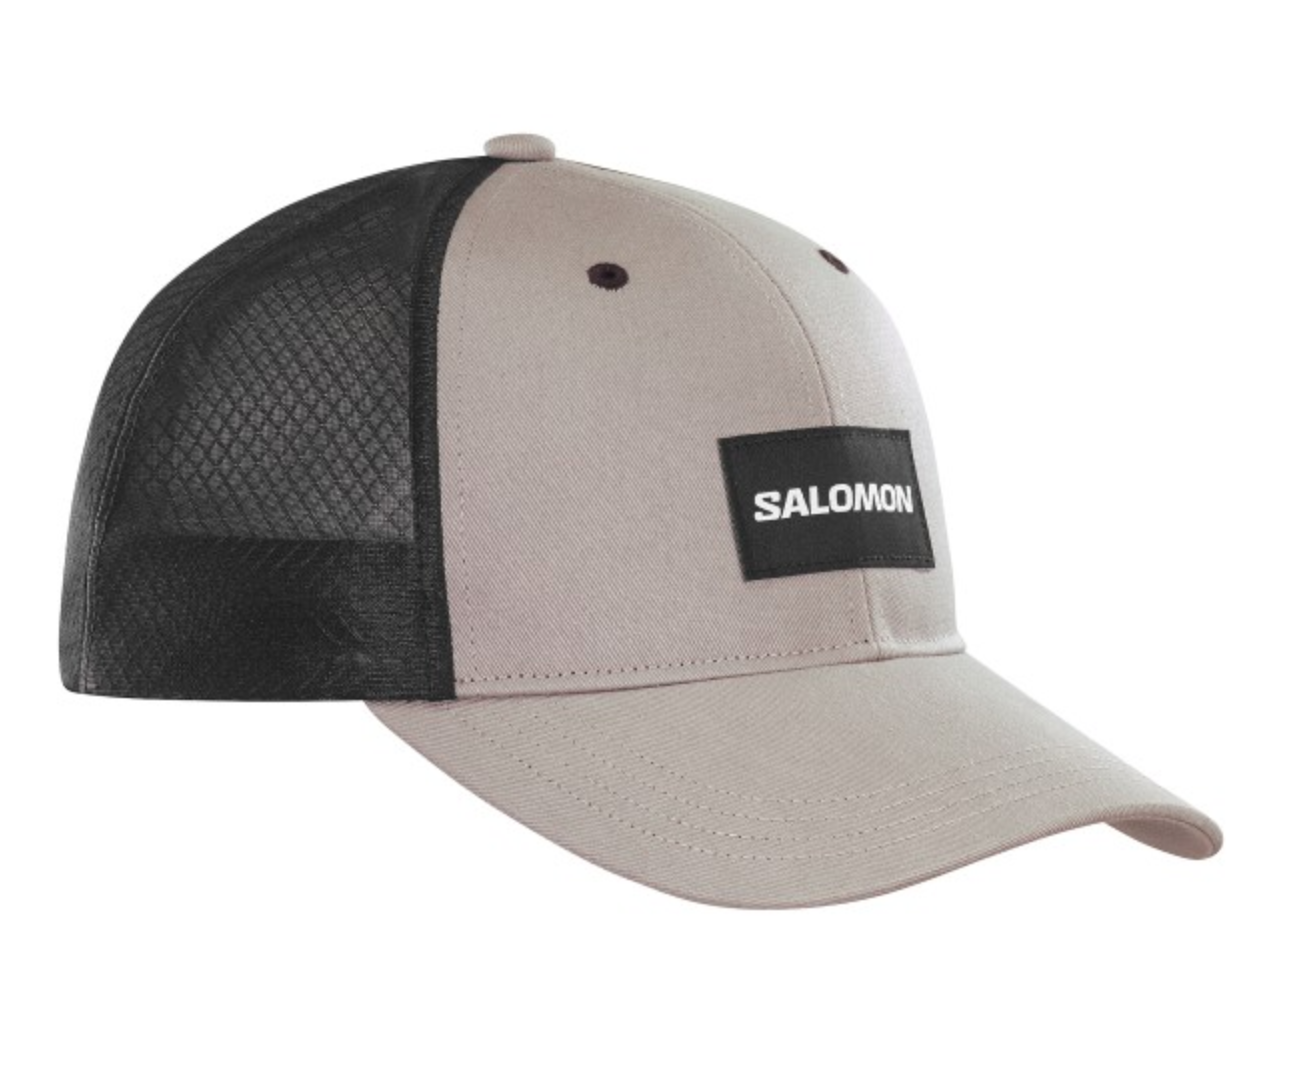 SALOMON TRUCKER CURVED CAP